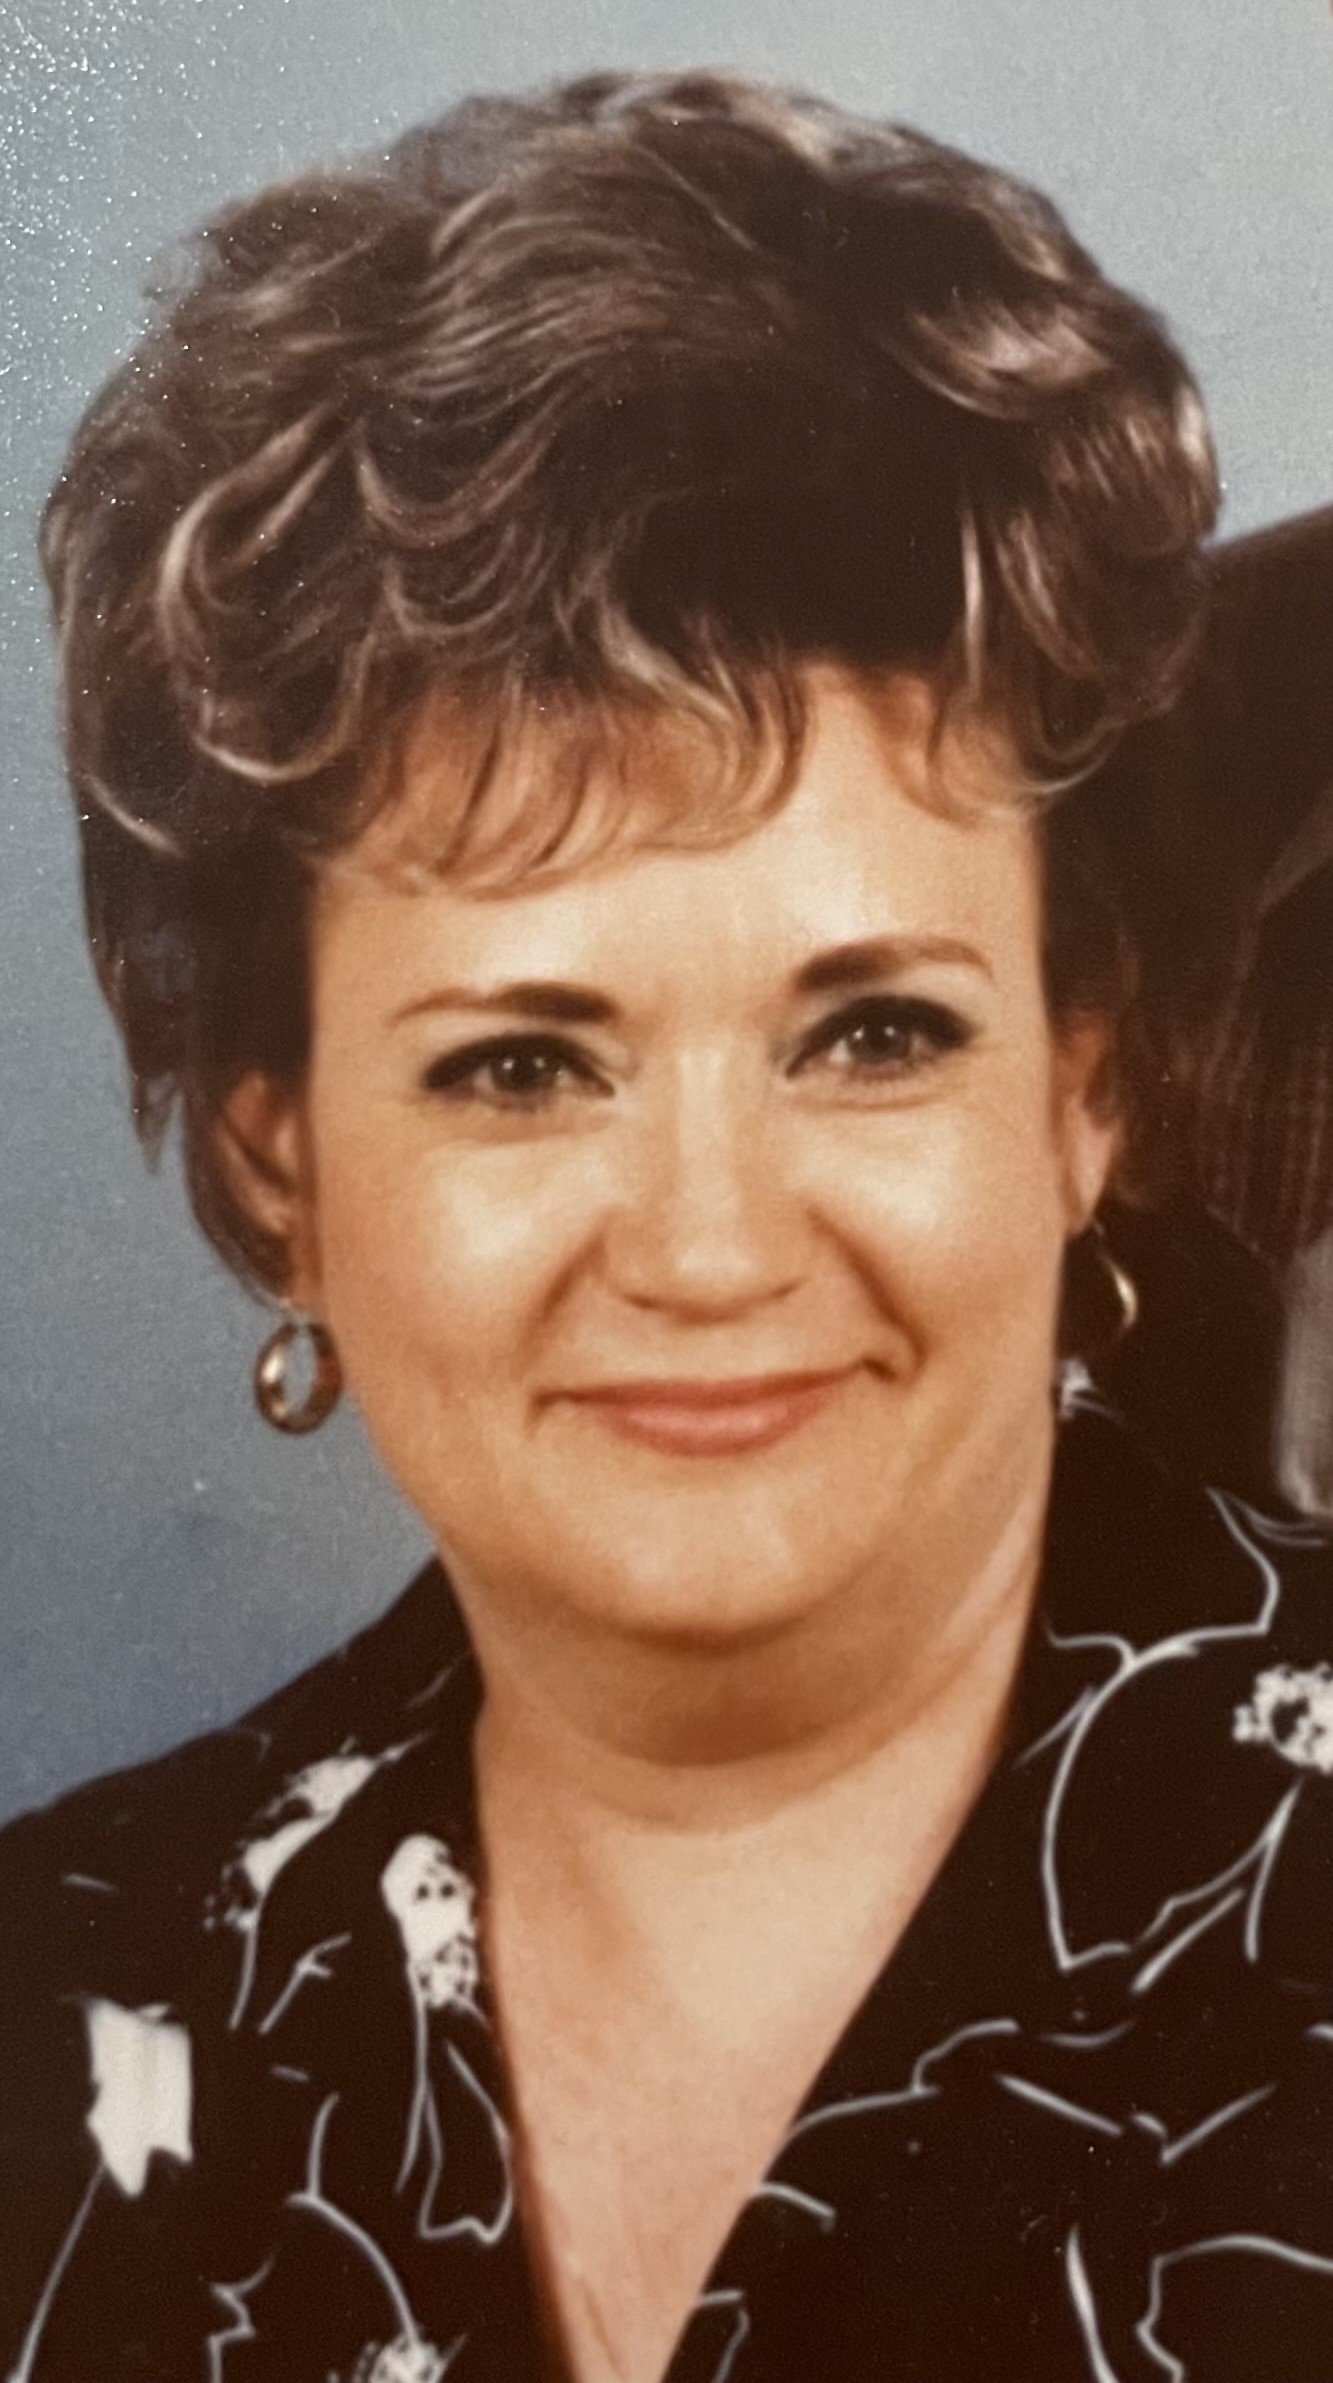 Obituary for Netha Hoover